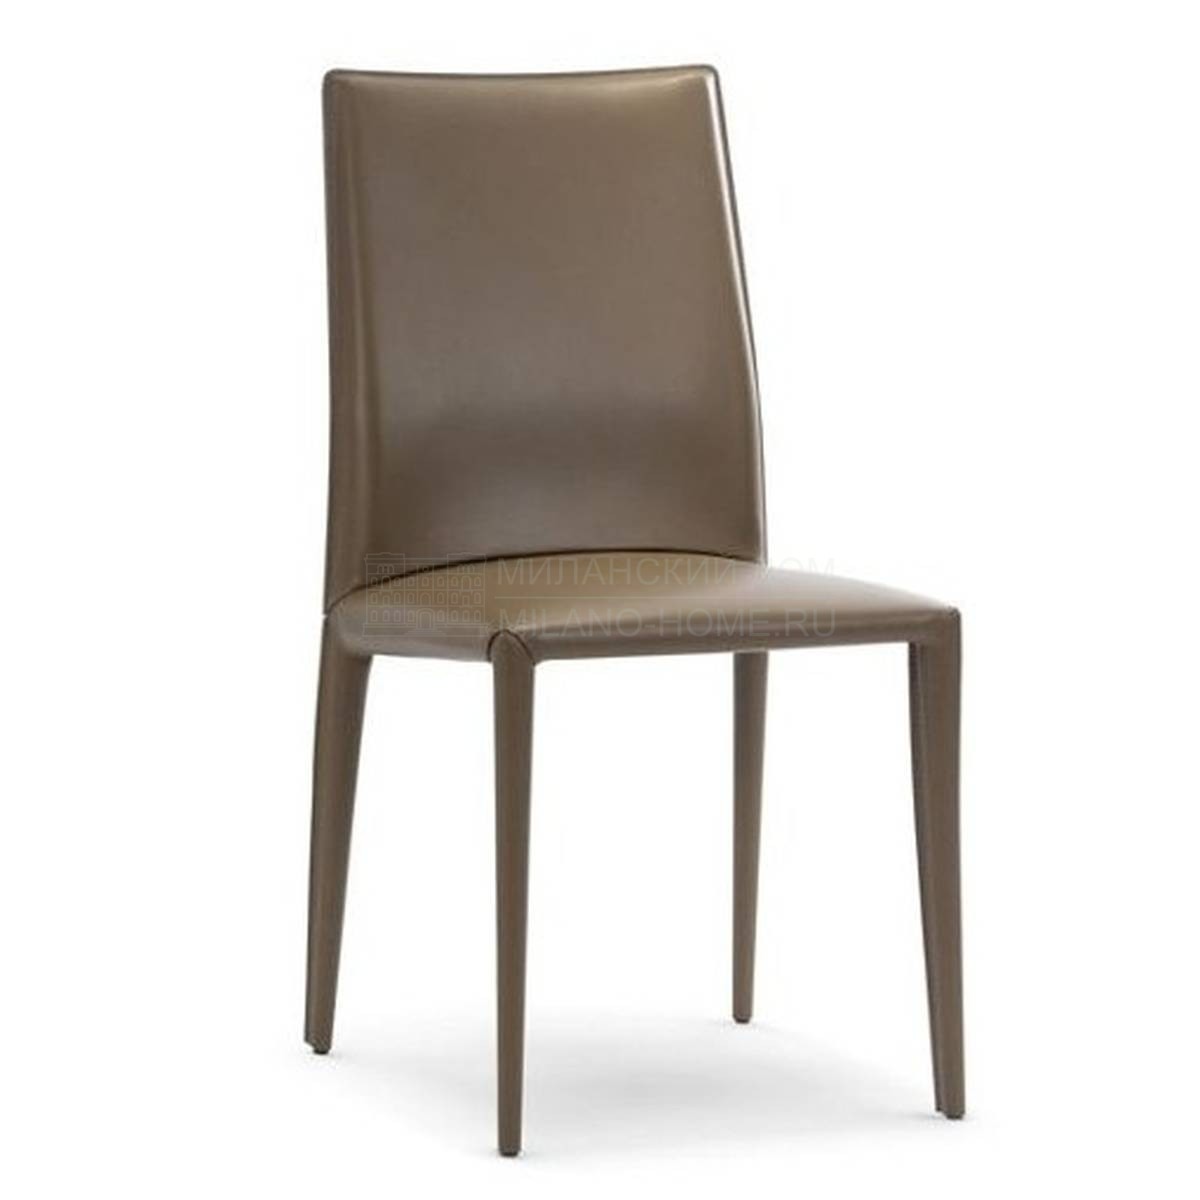 Кожаный стул Sara chair из Франции фабрики ROCHE BOBOIS